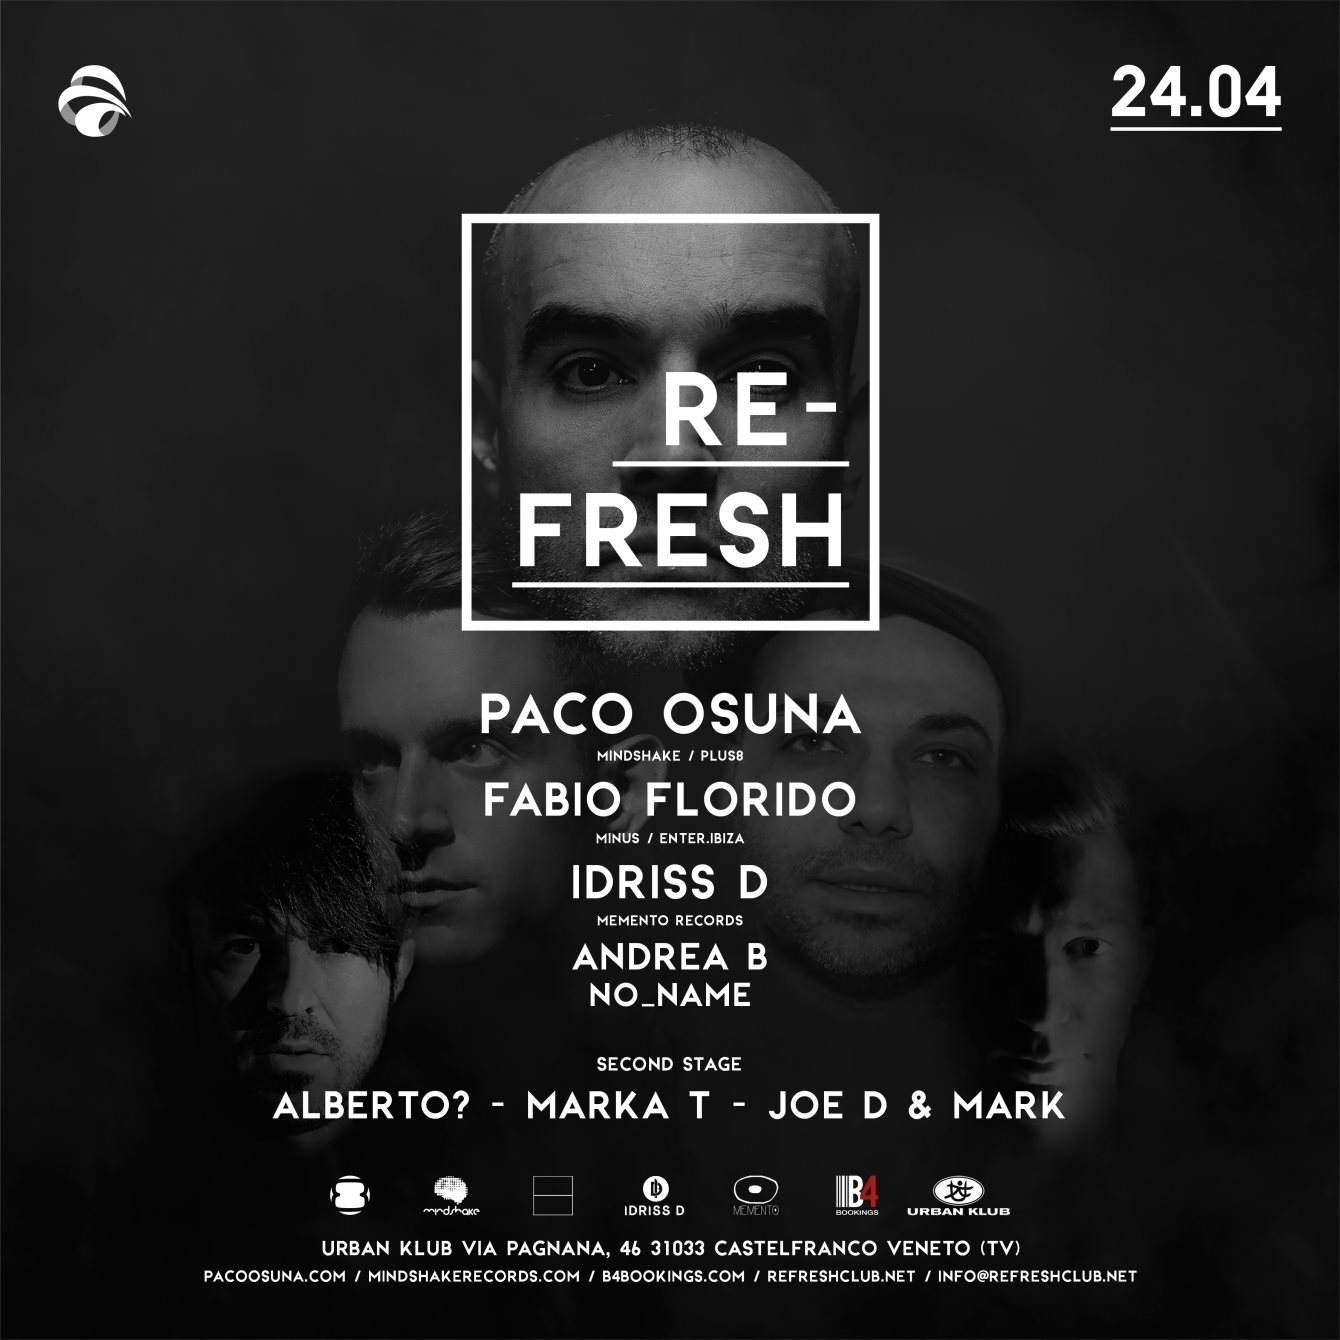 Re-Fresh #7: Paco Osuna - Fabio Florido - Idriss D - Página trasera